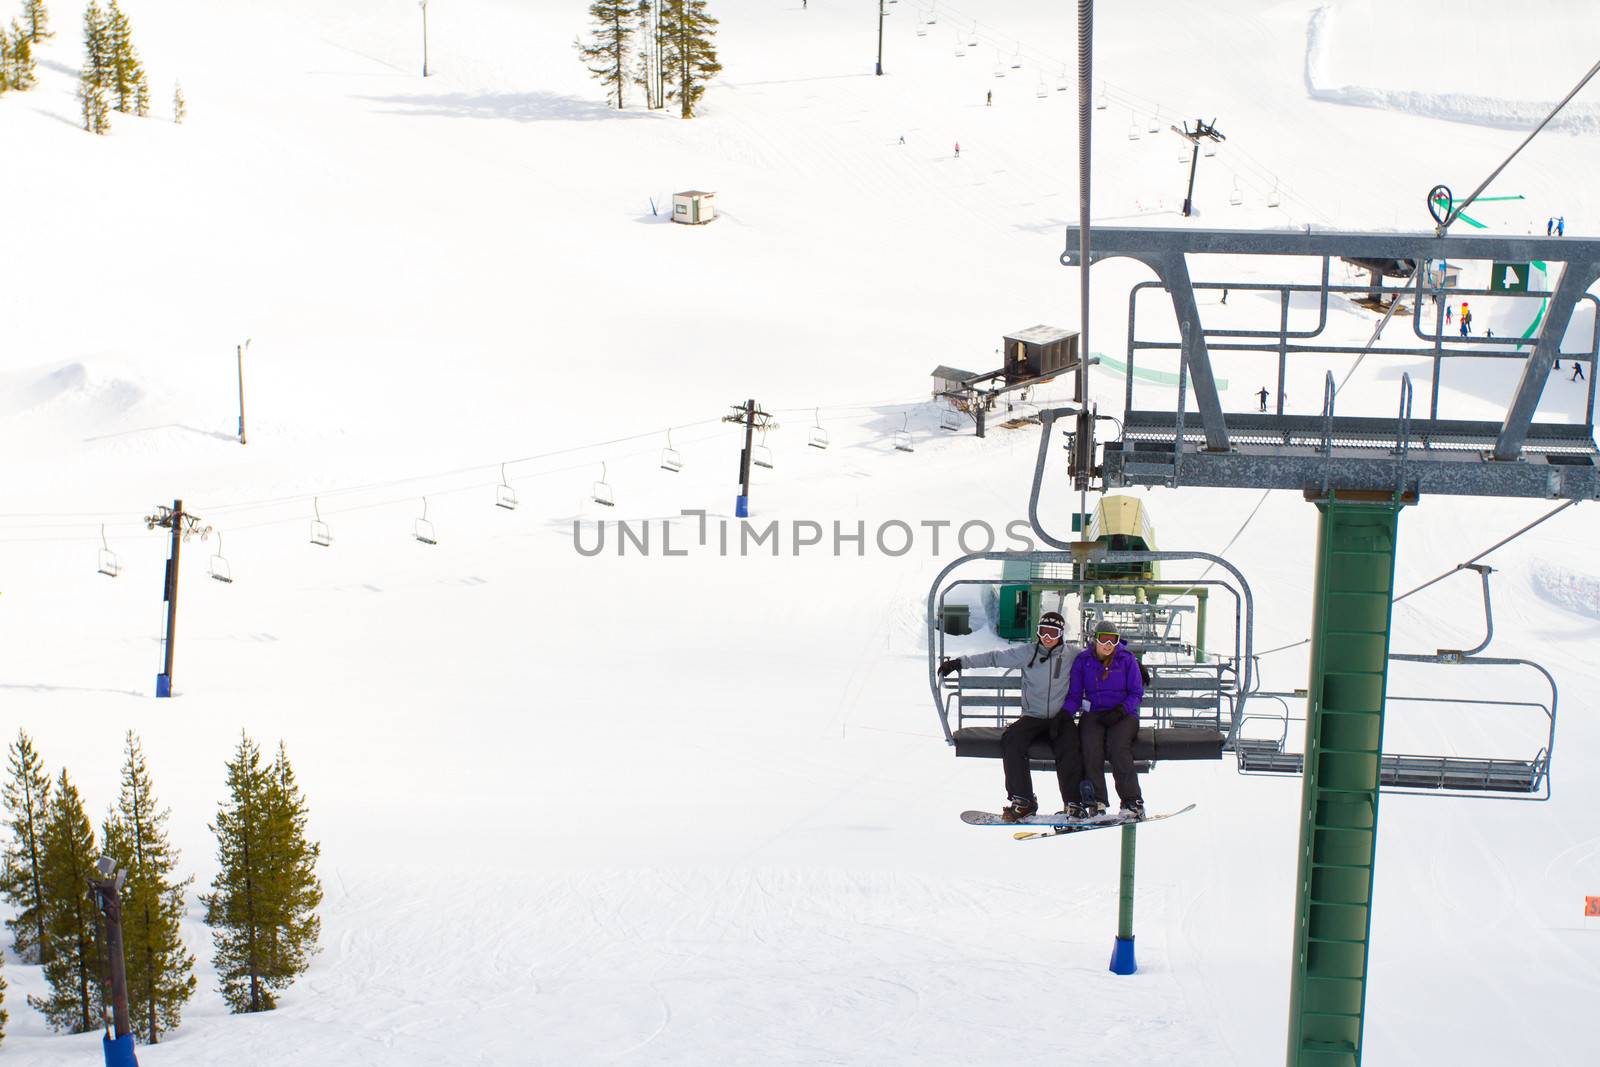 Couple on Ski Lift by joshuaraineyphotography